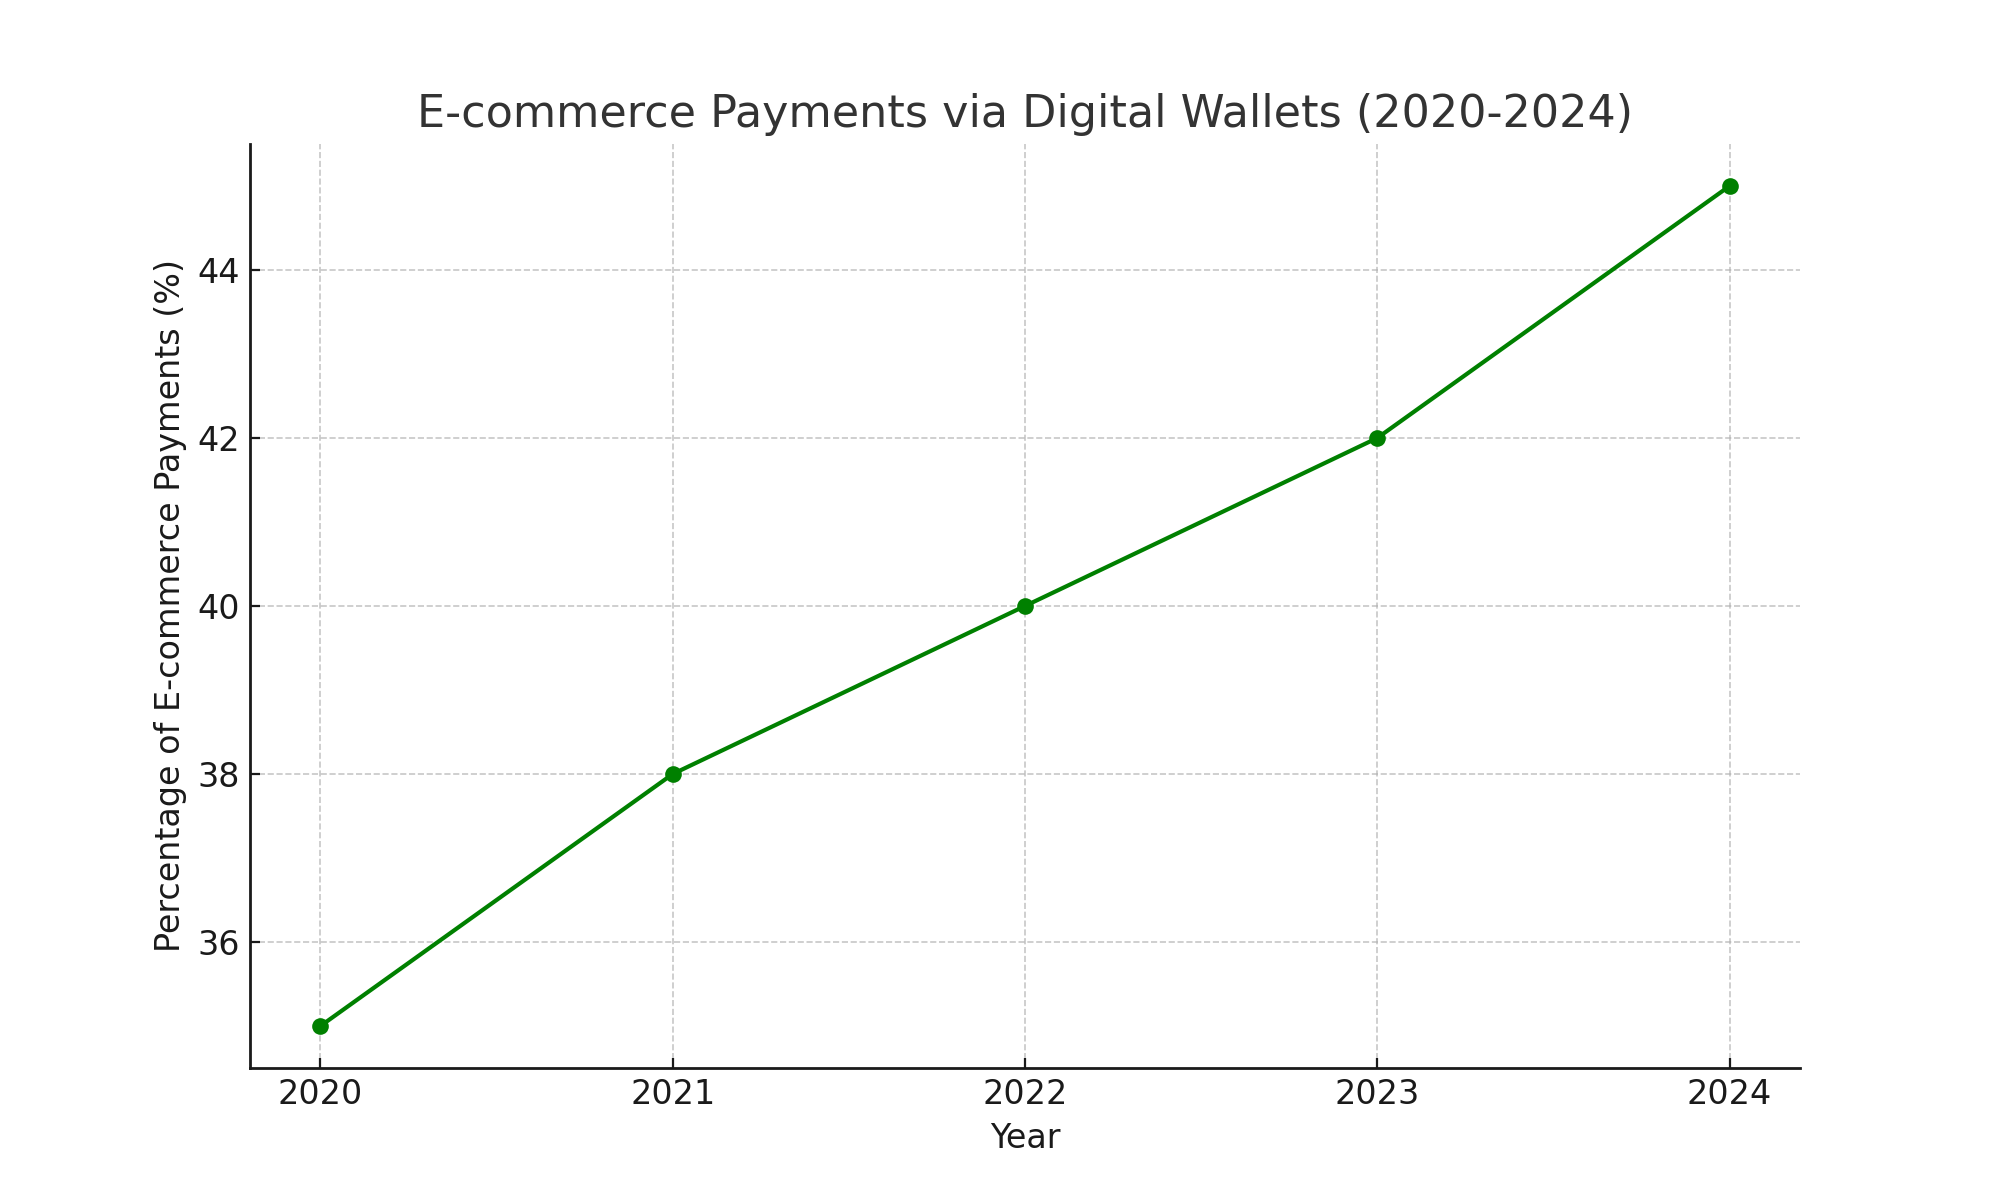 E-commerce payments via digital wallets (2020-2024)